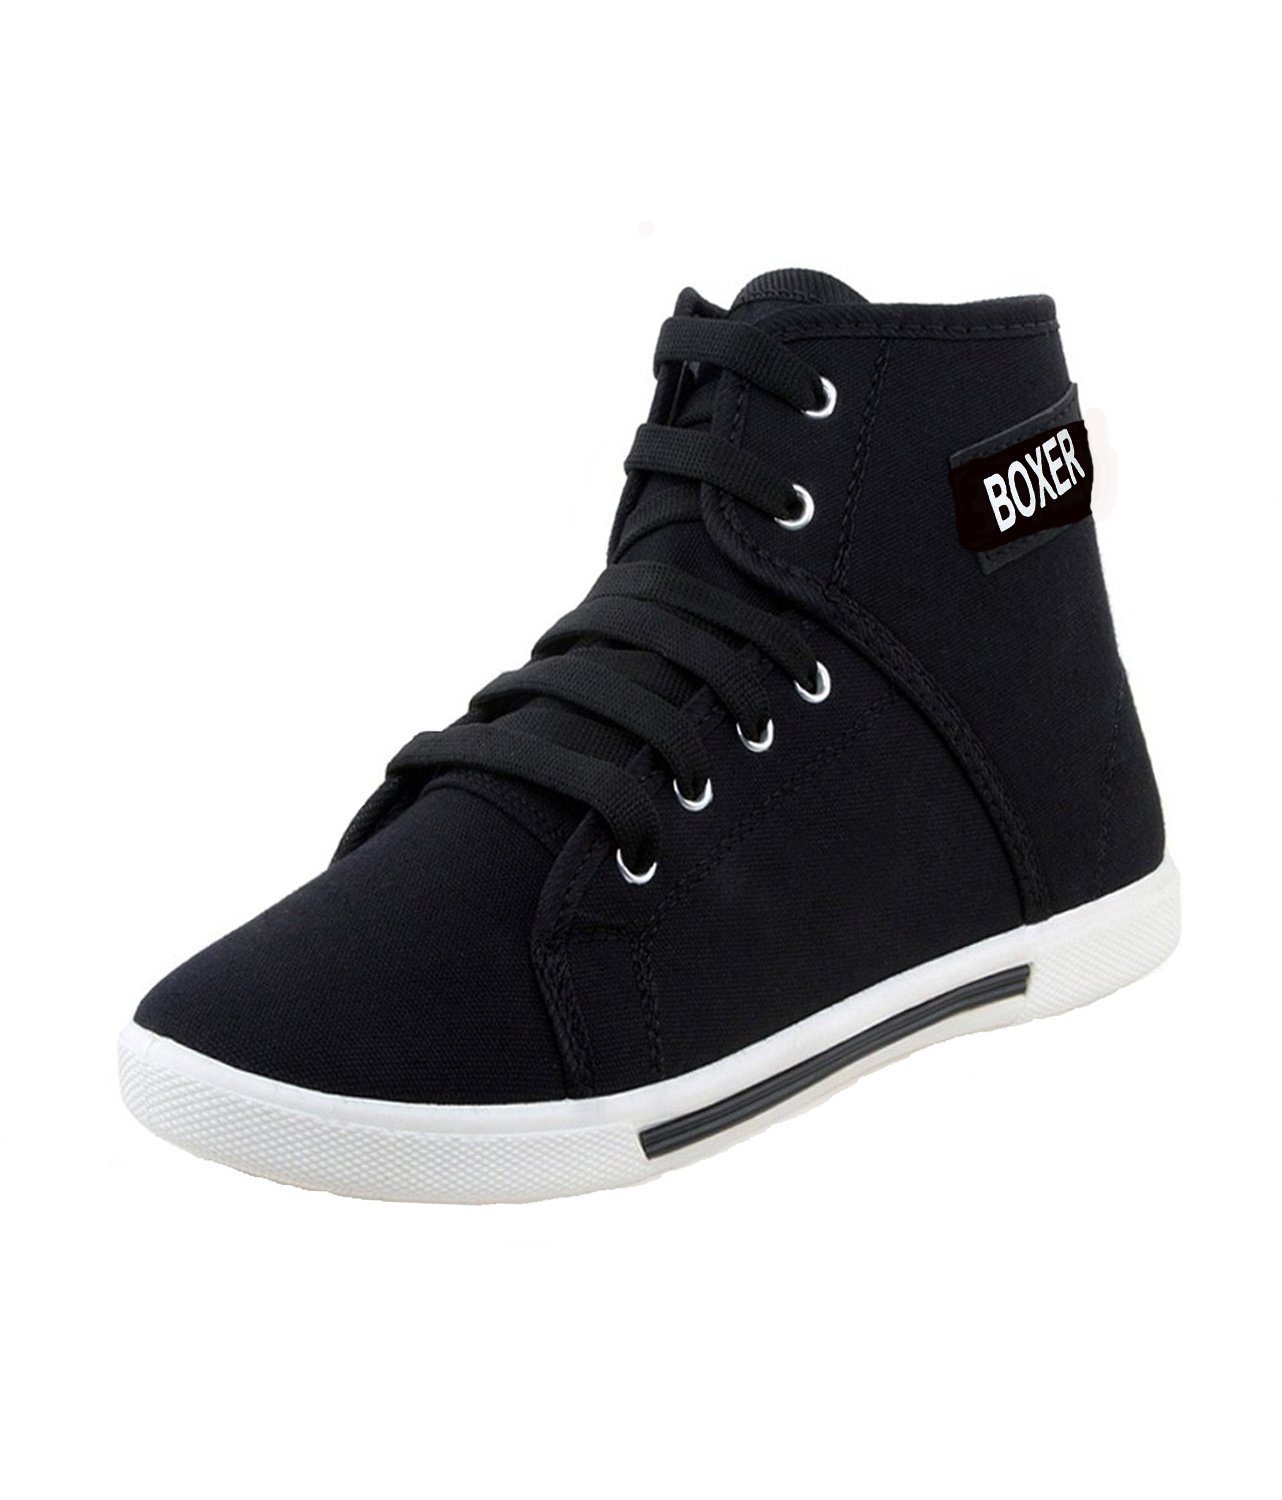 Buy BAP Men's Black Canvas Sneakers Online @ ₹799 from ShopClues